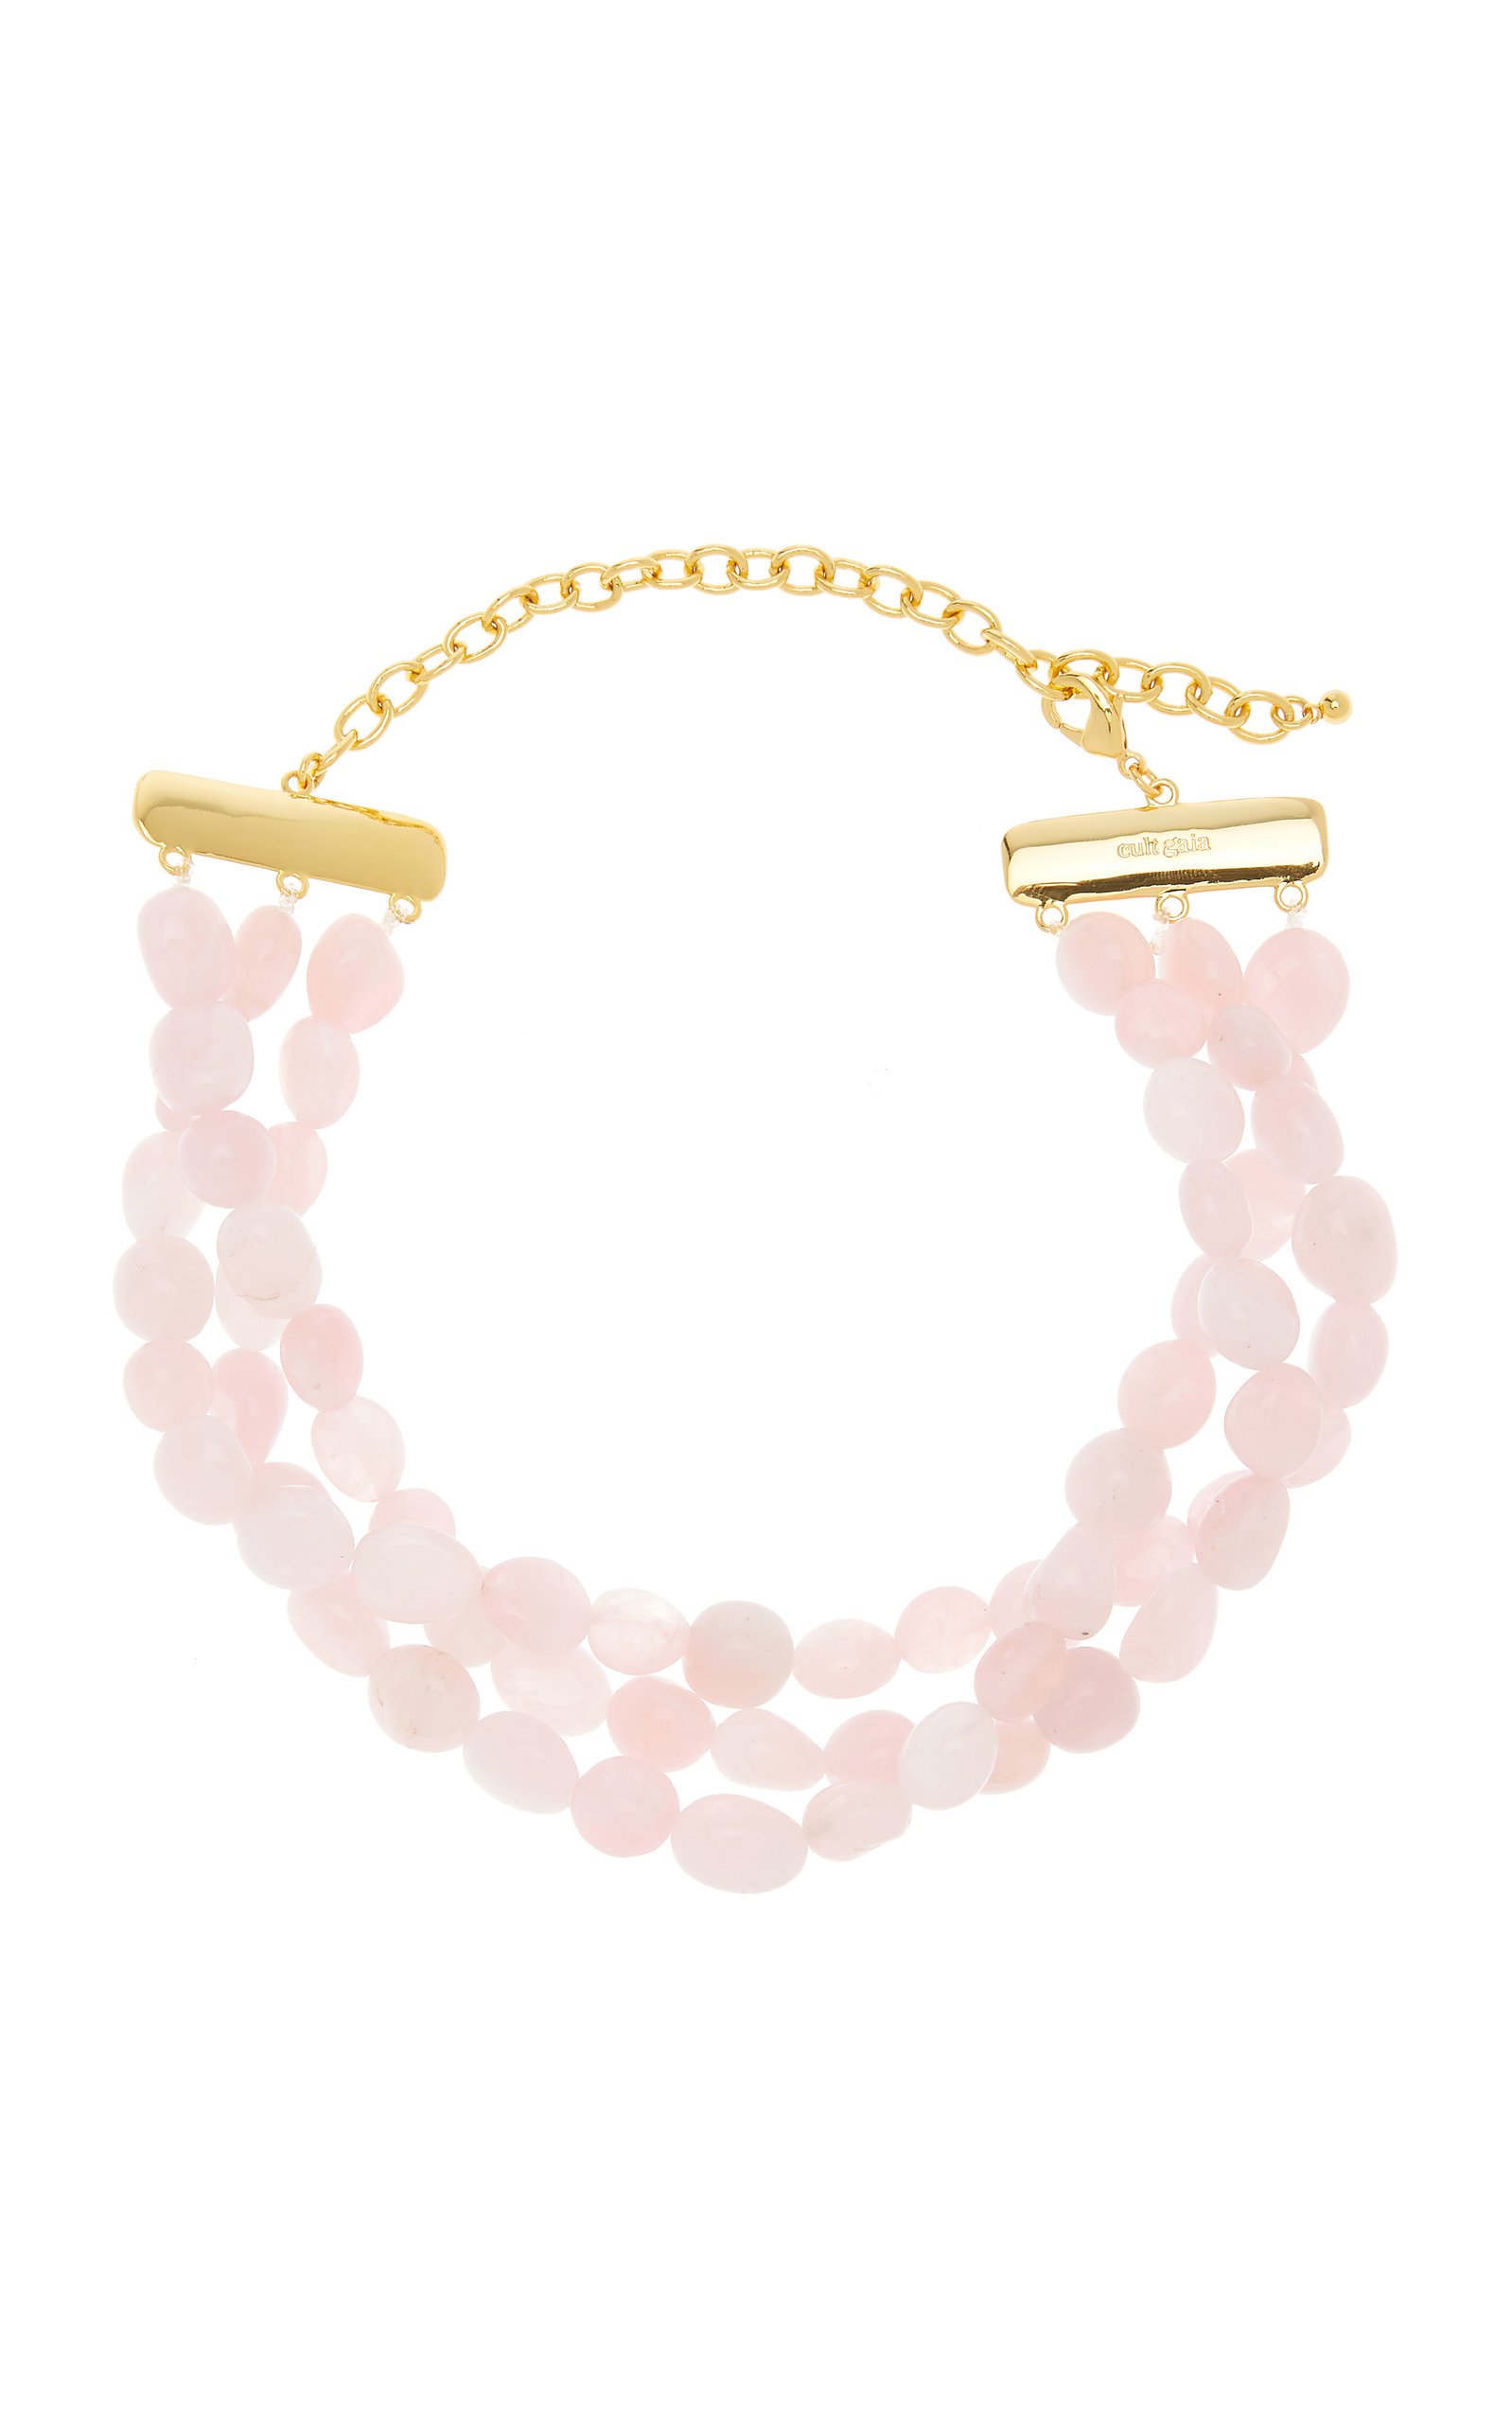 Cult Gaia - Women's Nora Gold-Tone Quartz Necklace - Pink - OS - Moda Operandi - Gifts For Her